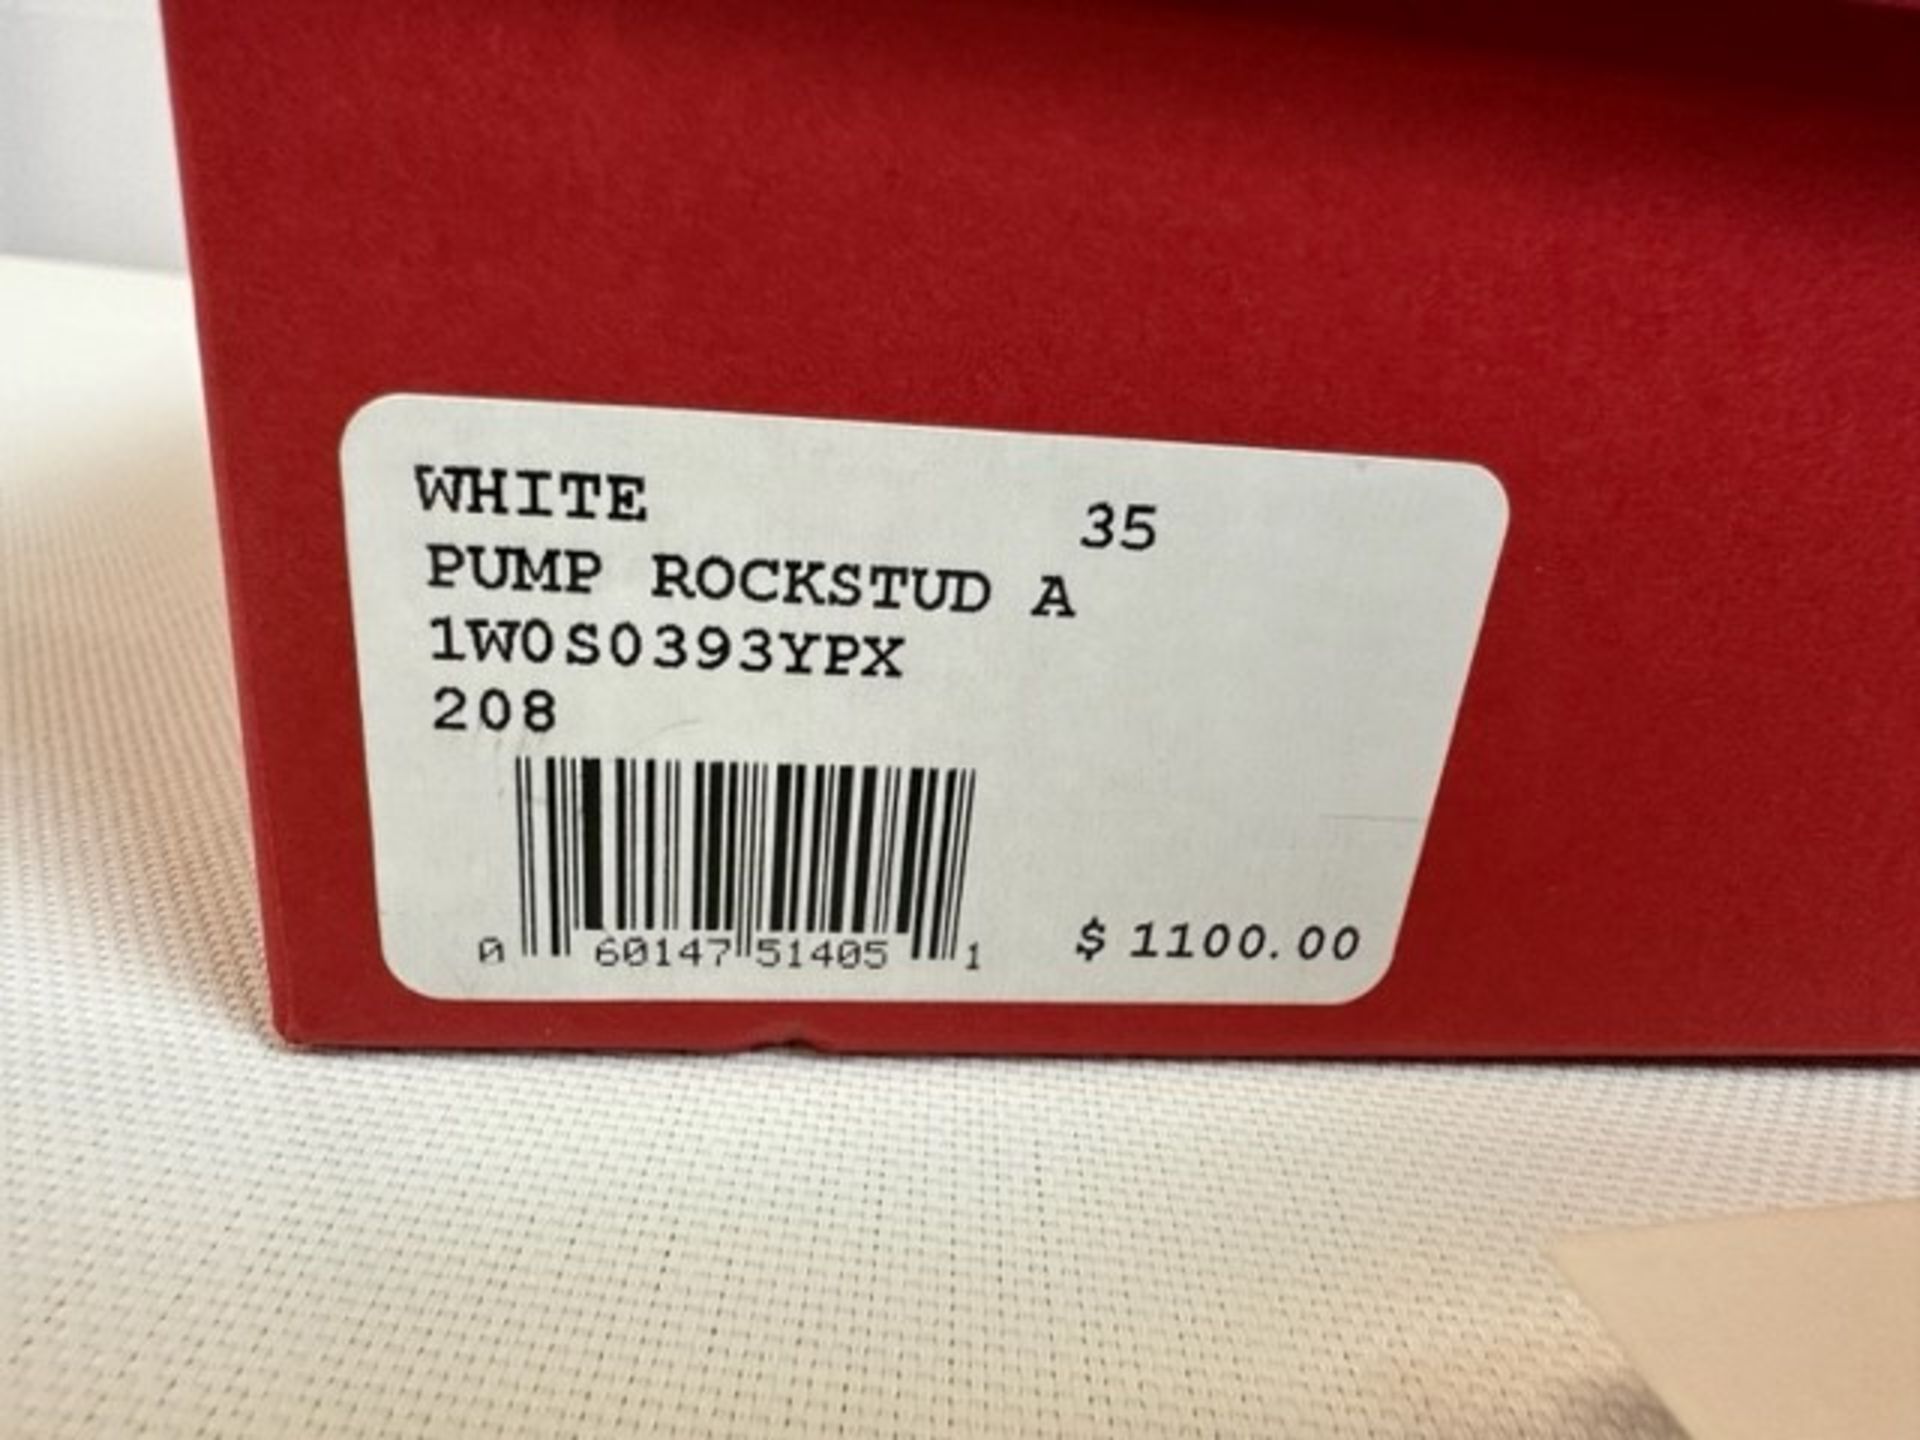 Valentino Garavani Pump Rockstud Ankle Pump Heel Size: 35, Color: White, Retail Price: $1100 - Image 4 of 5